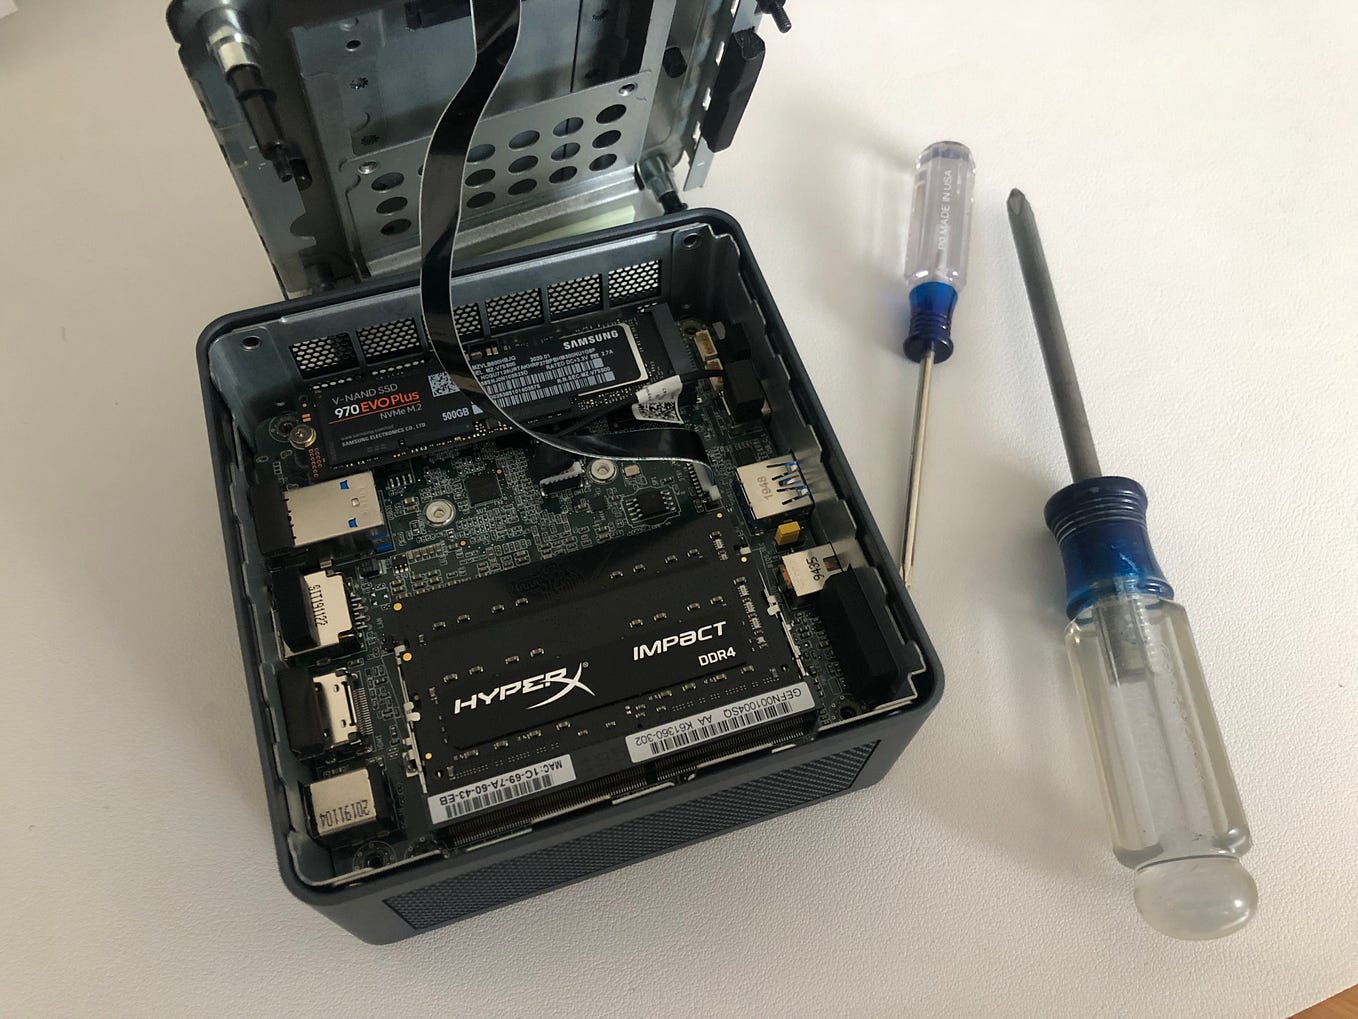 Sonoff Basic R2 + Tasmota (no solder), by Jordan Rounds